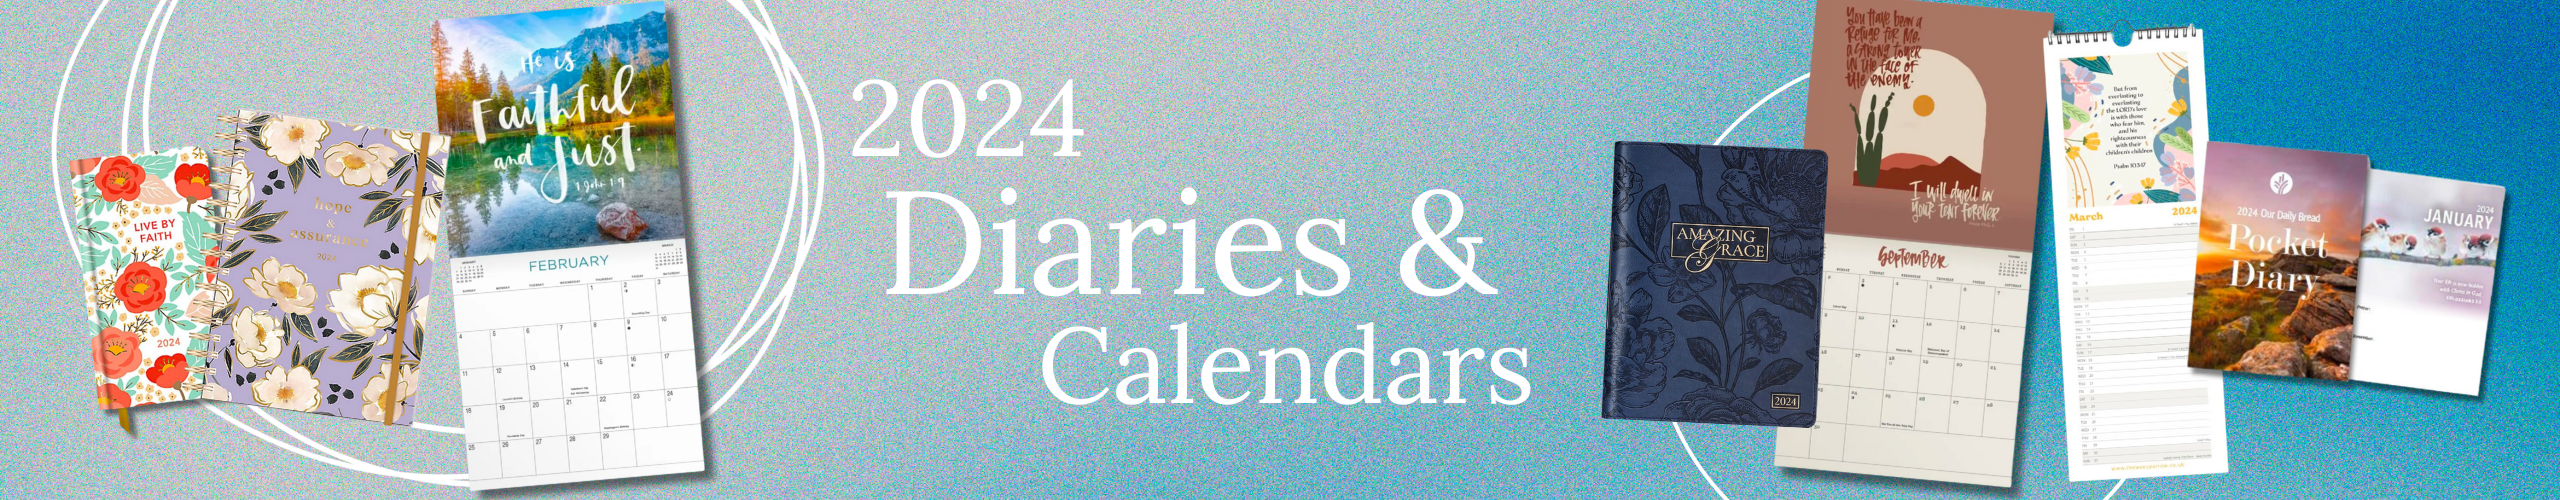 2024 calendar and diaries